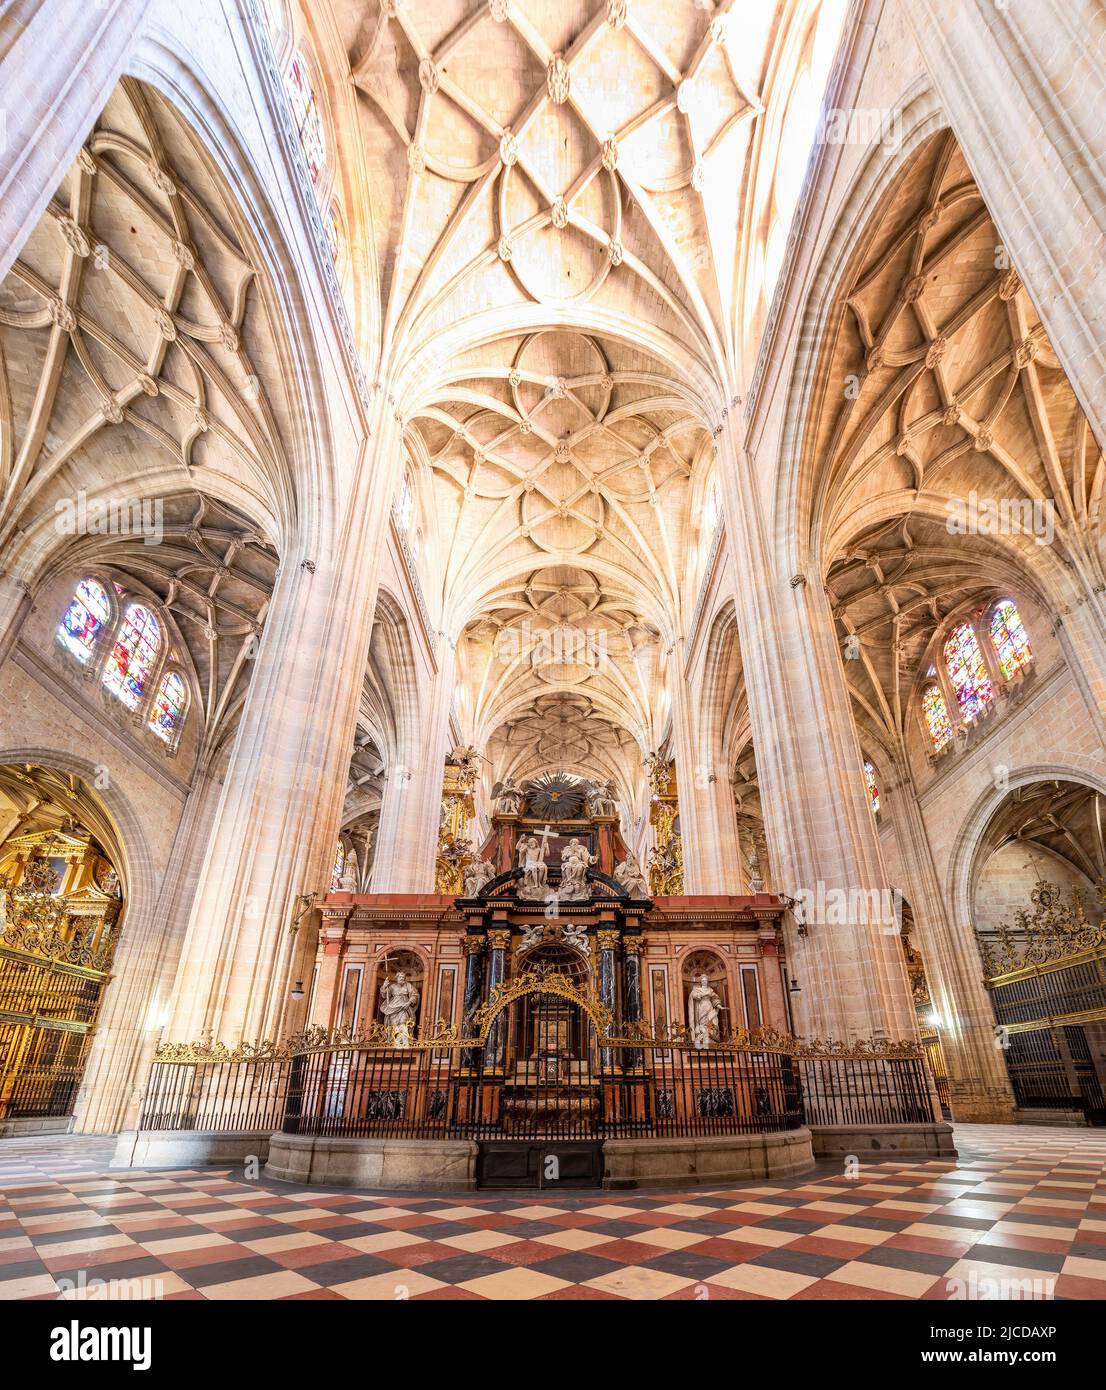 Segovia, España - 9 de octubre de 2017: Dentro de la Catedral de Segovia, España Foto de stock